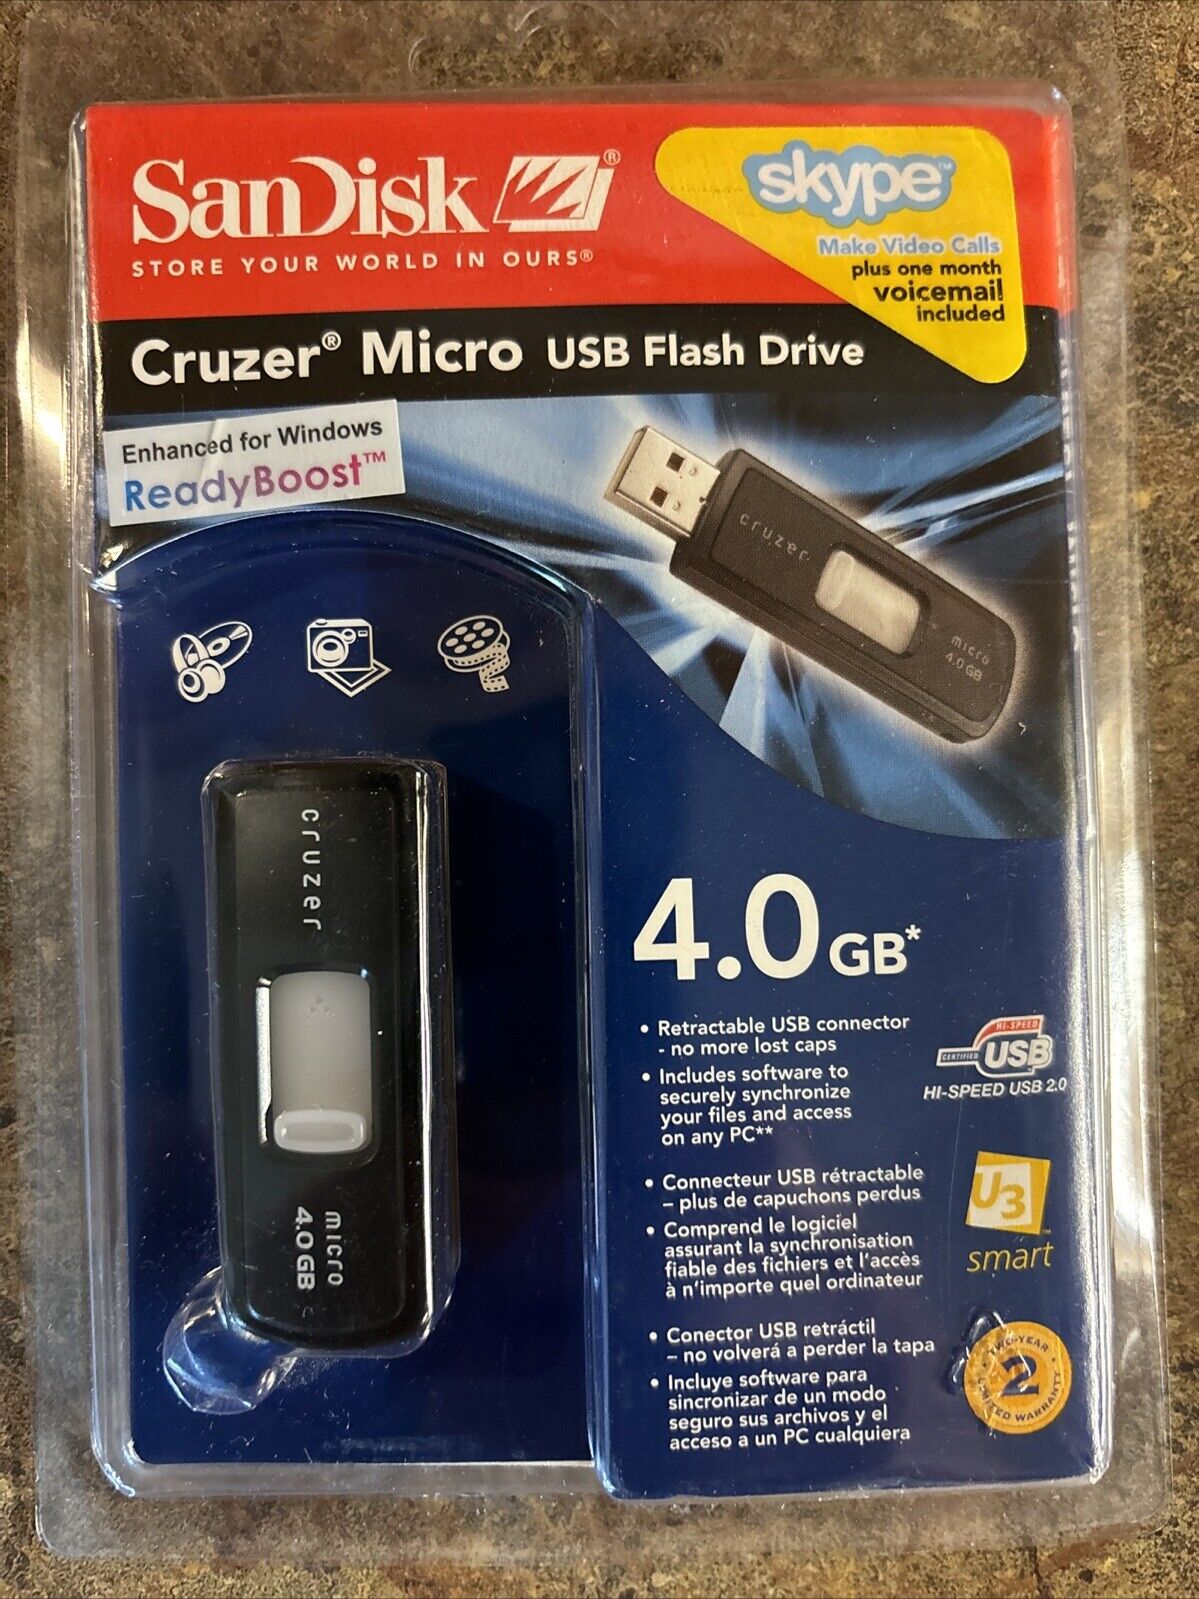 Sandisk Cruzer Micro USB 4.0 GB Flash Drive BRAND NEW Factory Sealed